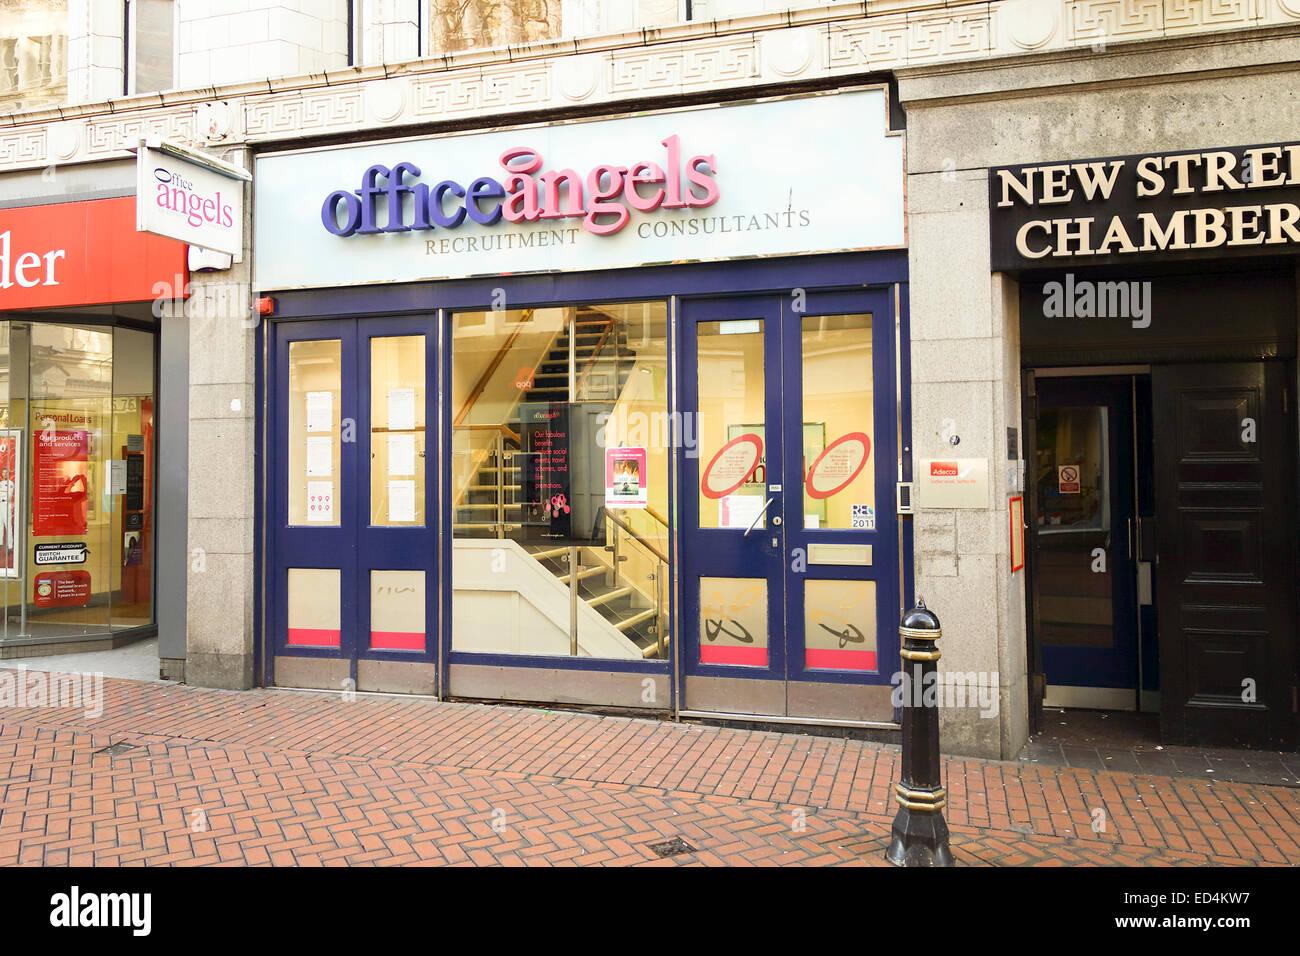 Office angels recruitment consultancy in Birmingham UK Stock Photo